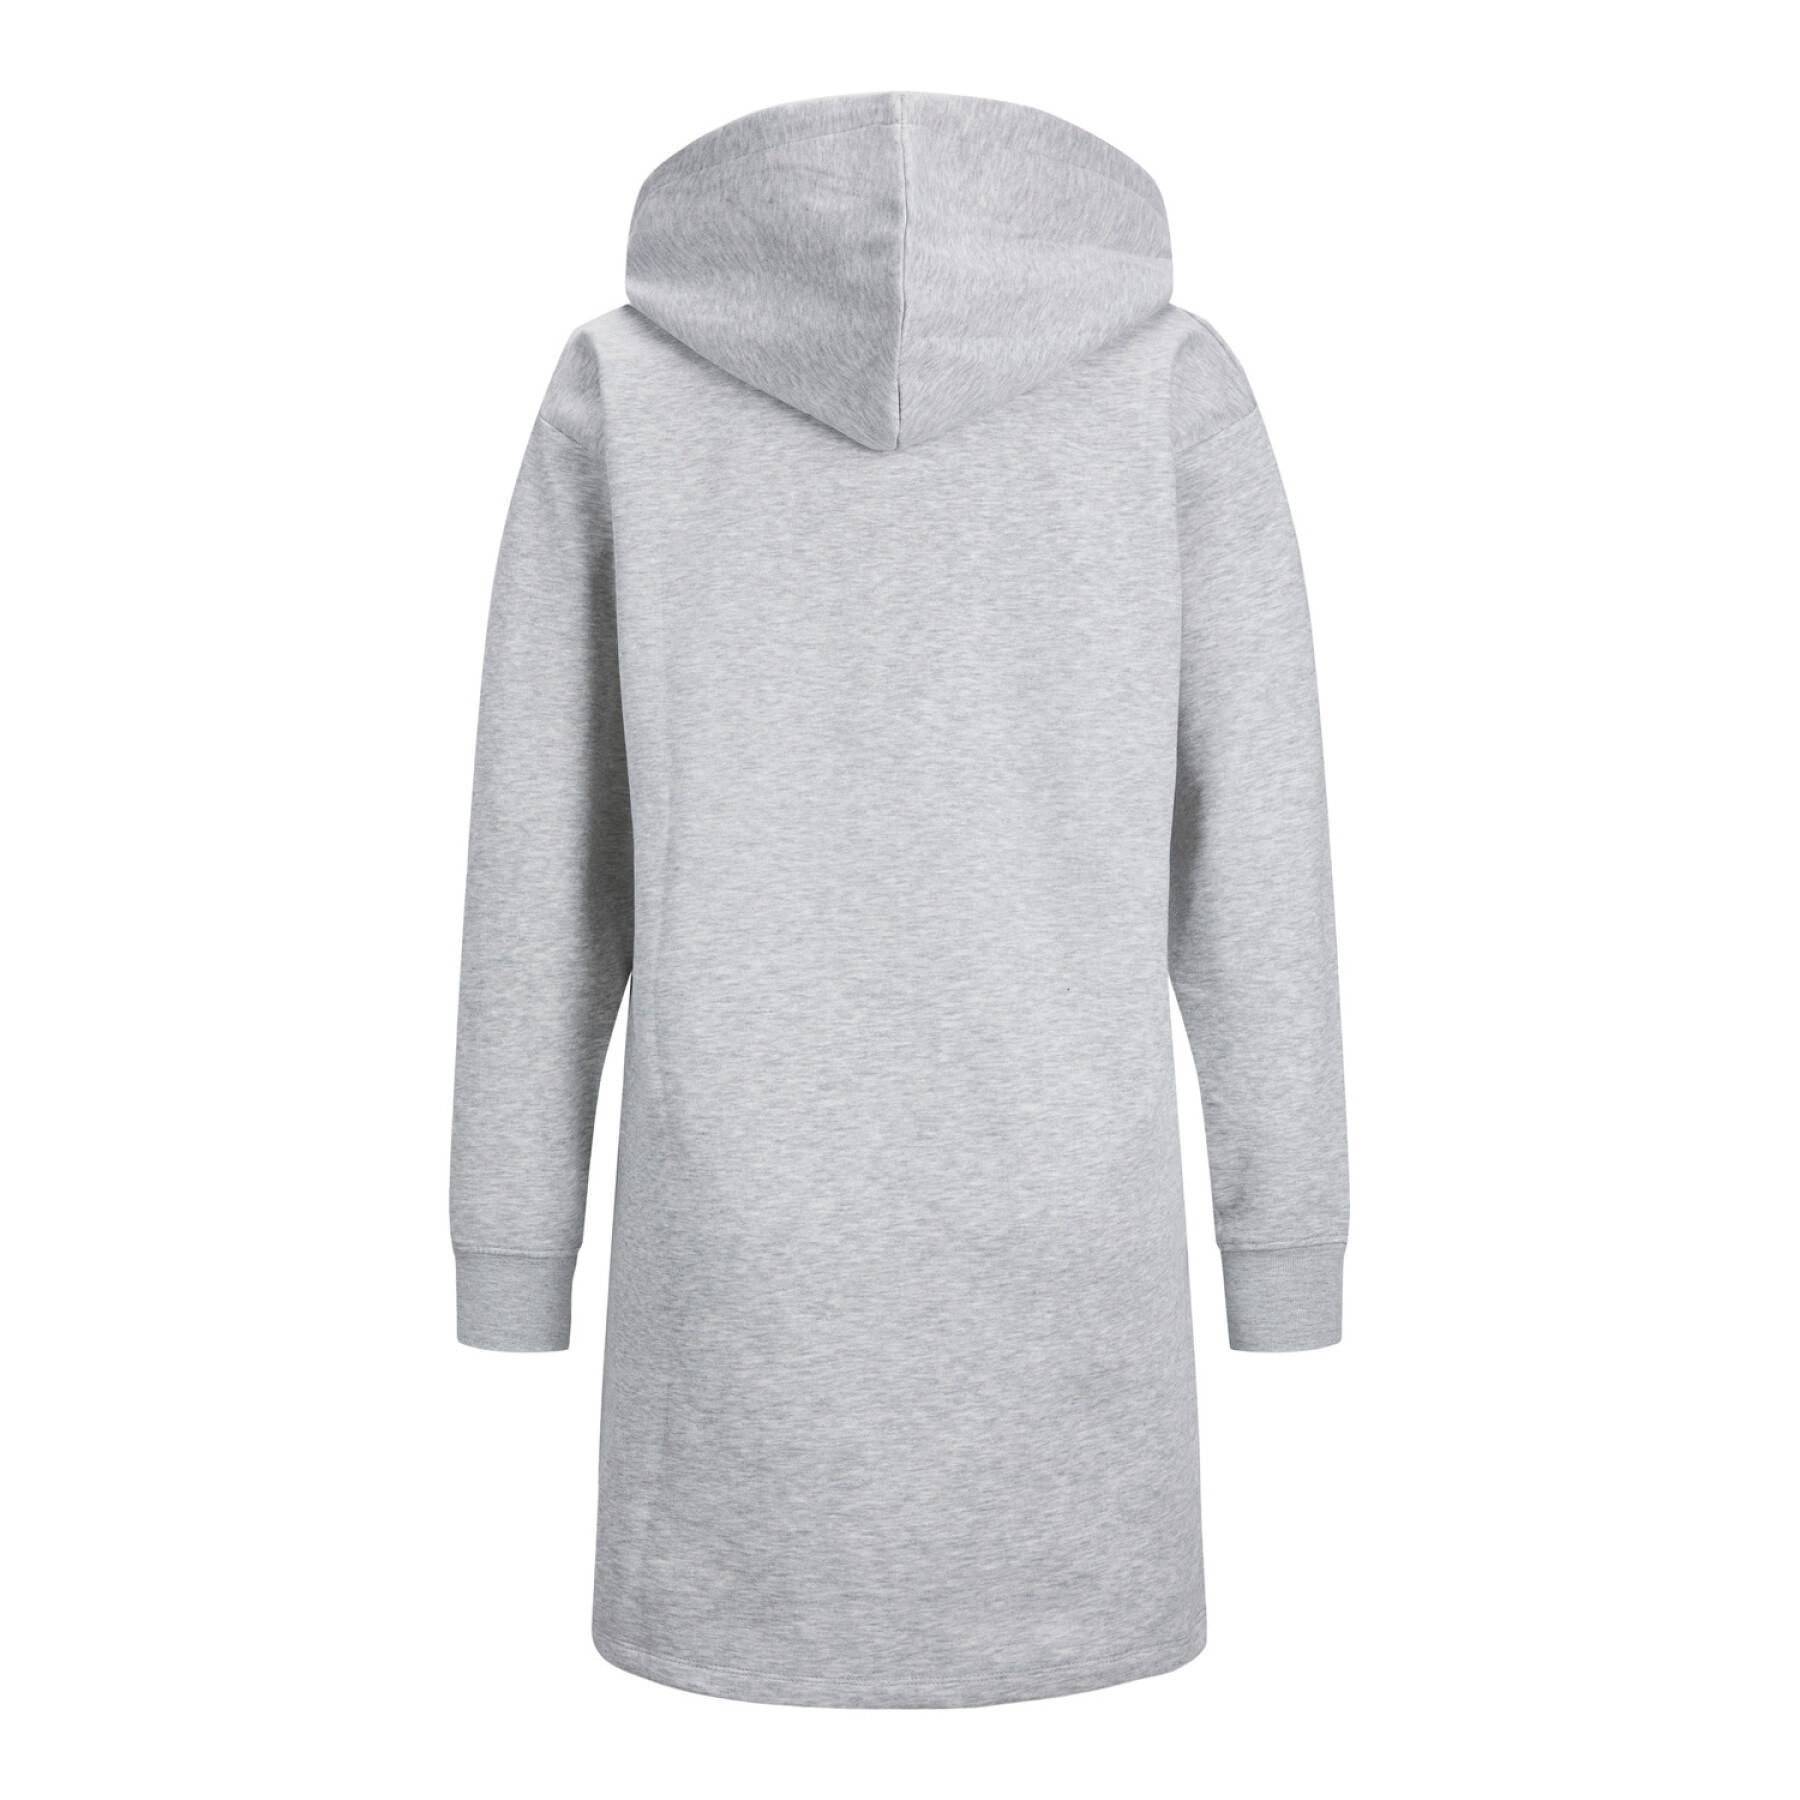 Women's hooded sweatshirt JJXX Abbie RLX